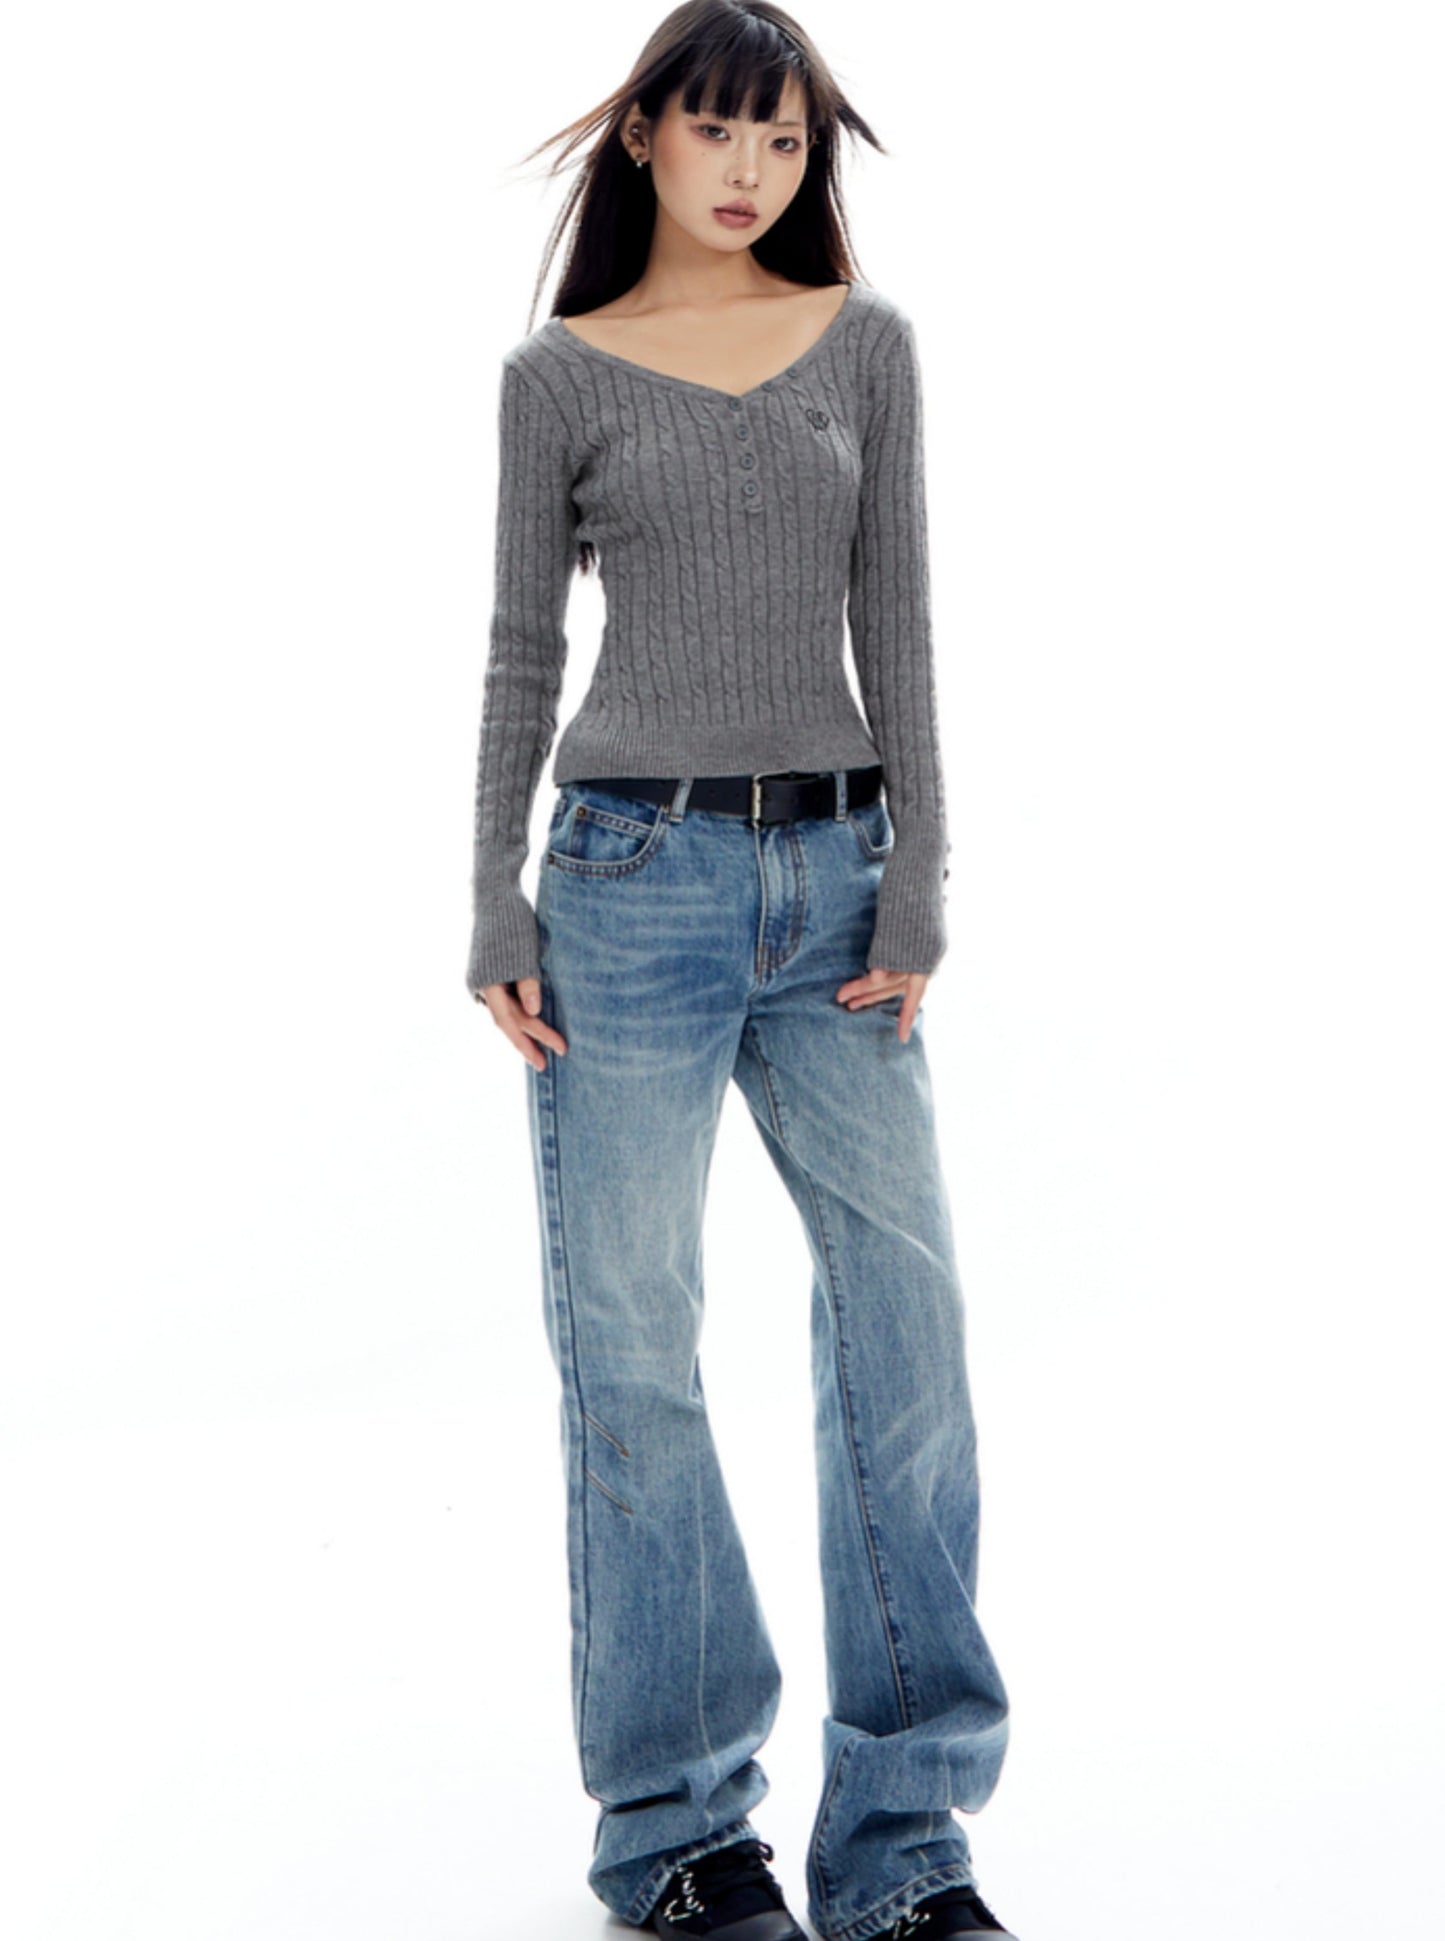 Retro Shoulder Cable V-Neck Sweater